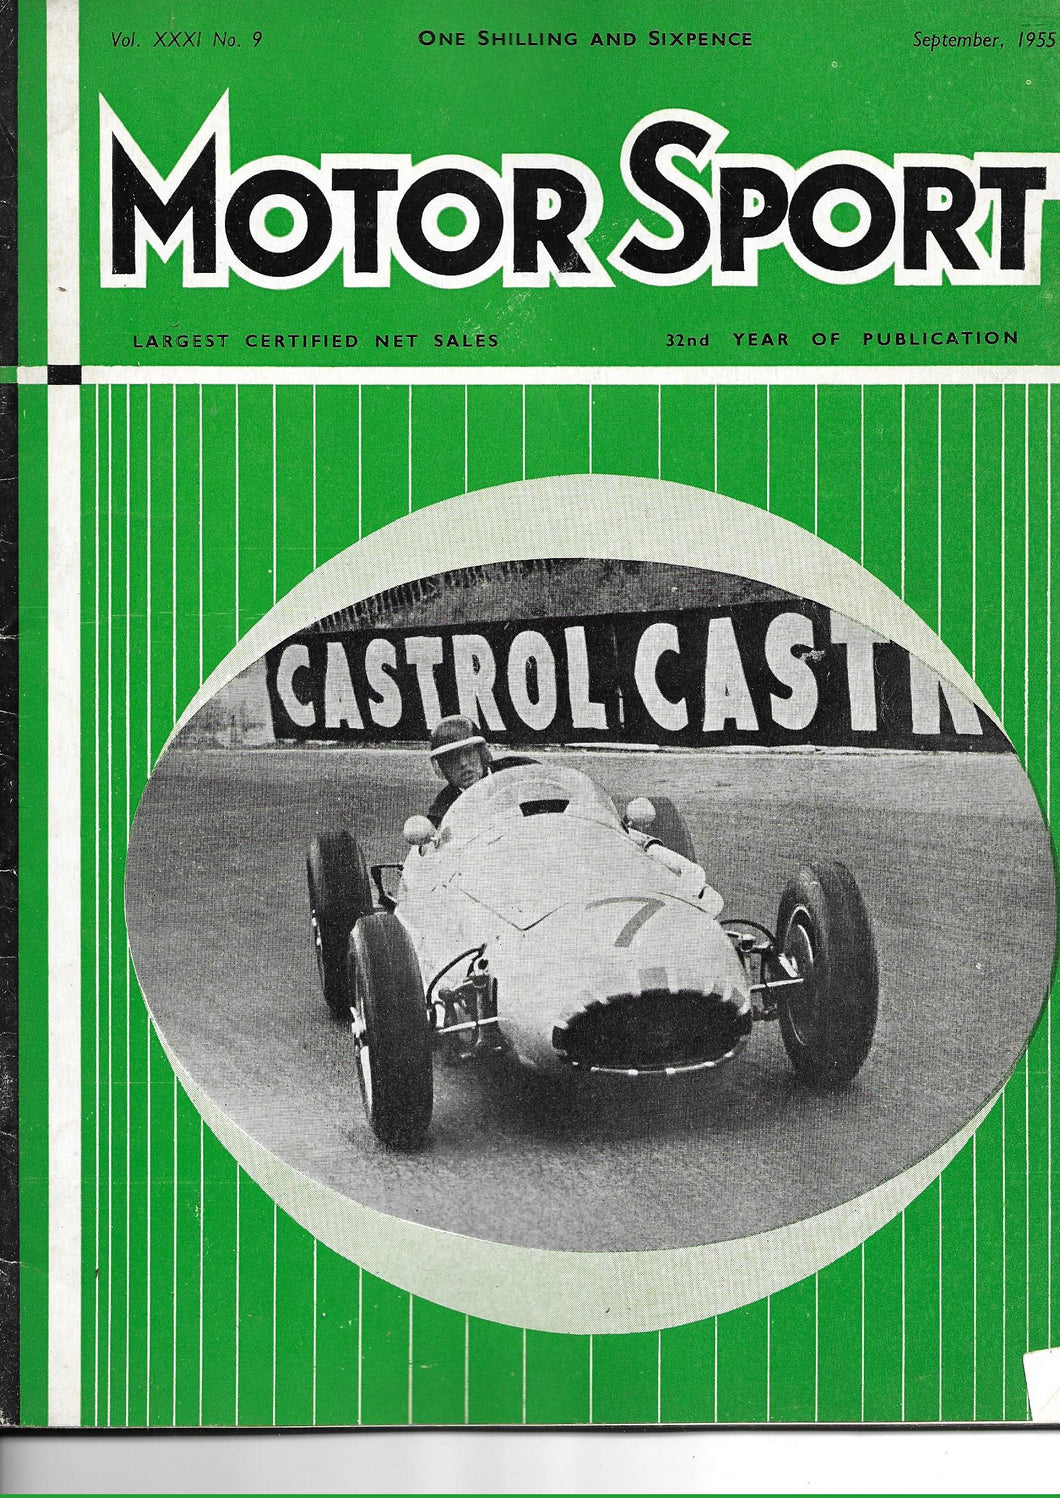 Motor Sport, Magazine, Vol XXXI No 9, September 1955,